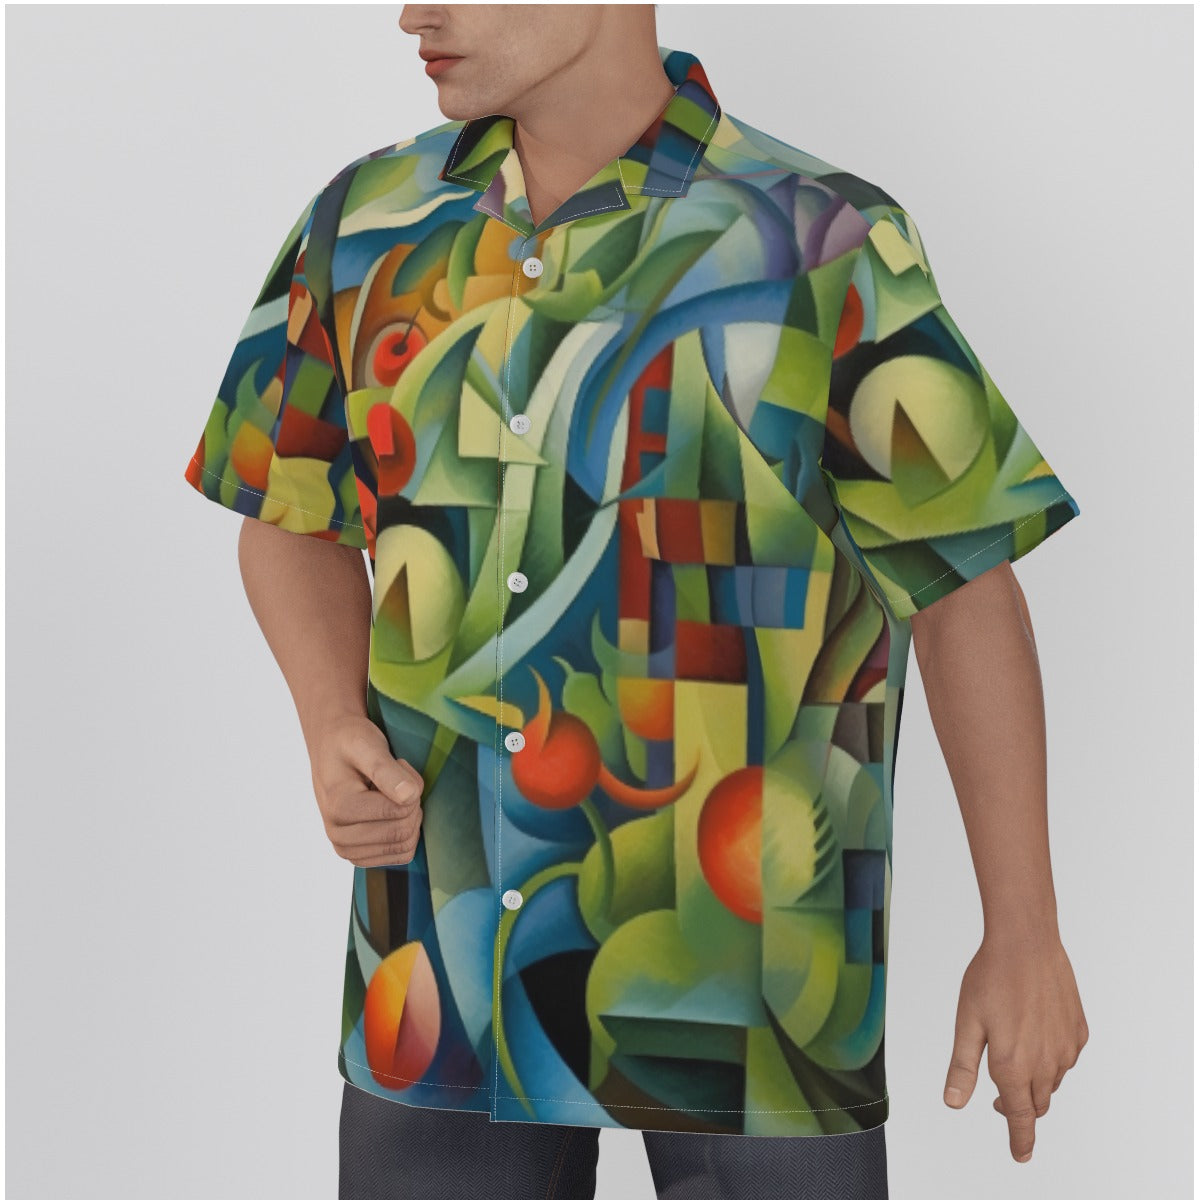 3QYNL All-Over Print Men's Hawaiian Shirt With Button Closure |115GSM Cotton poplin